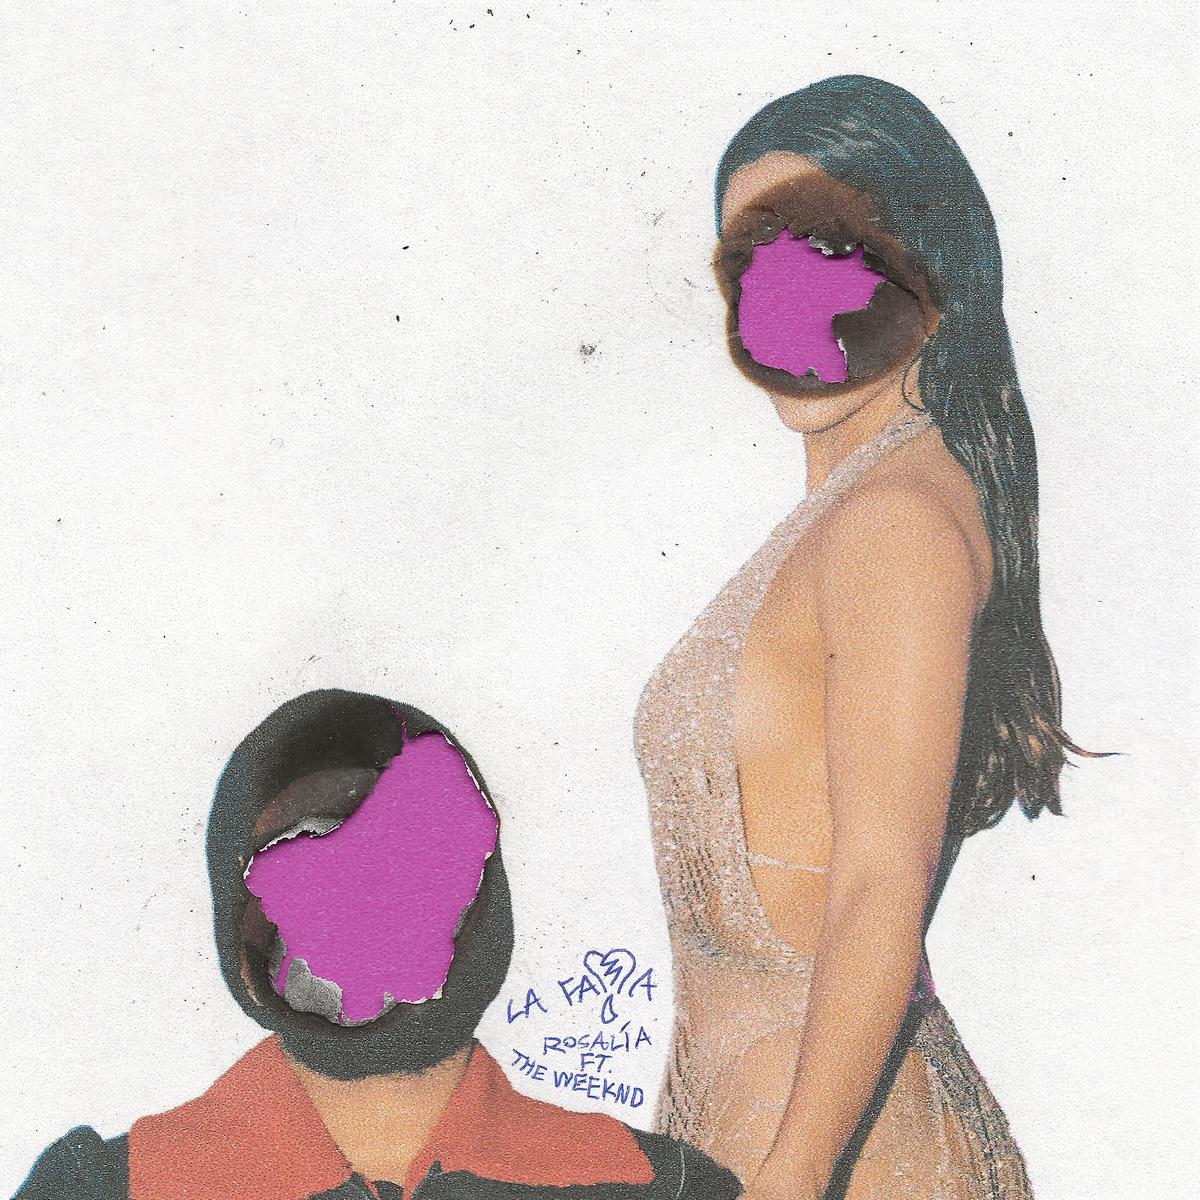 Rosalía & The Weeknd Go Tit For Tat In “LA FAMA”